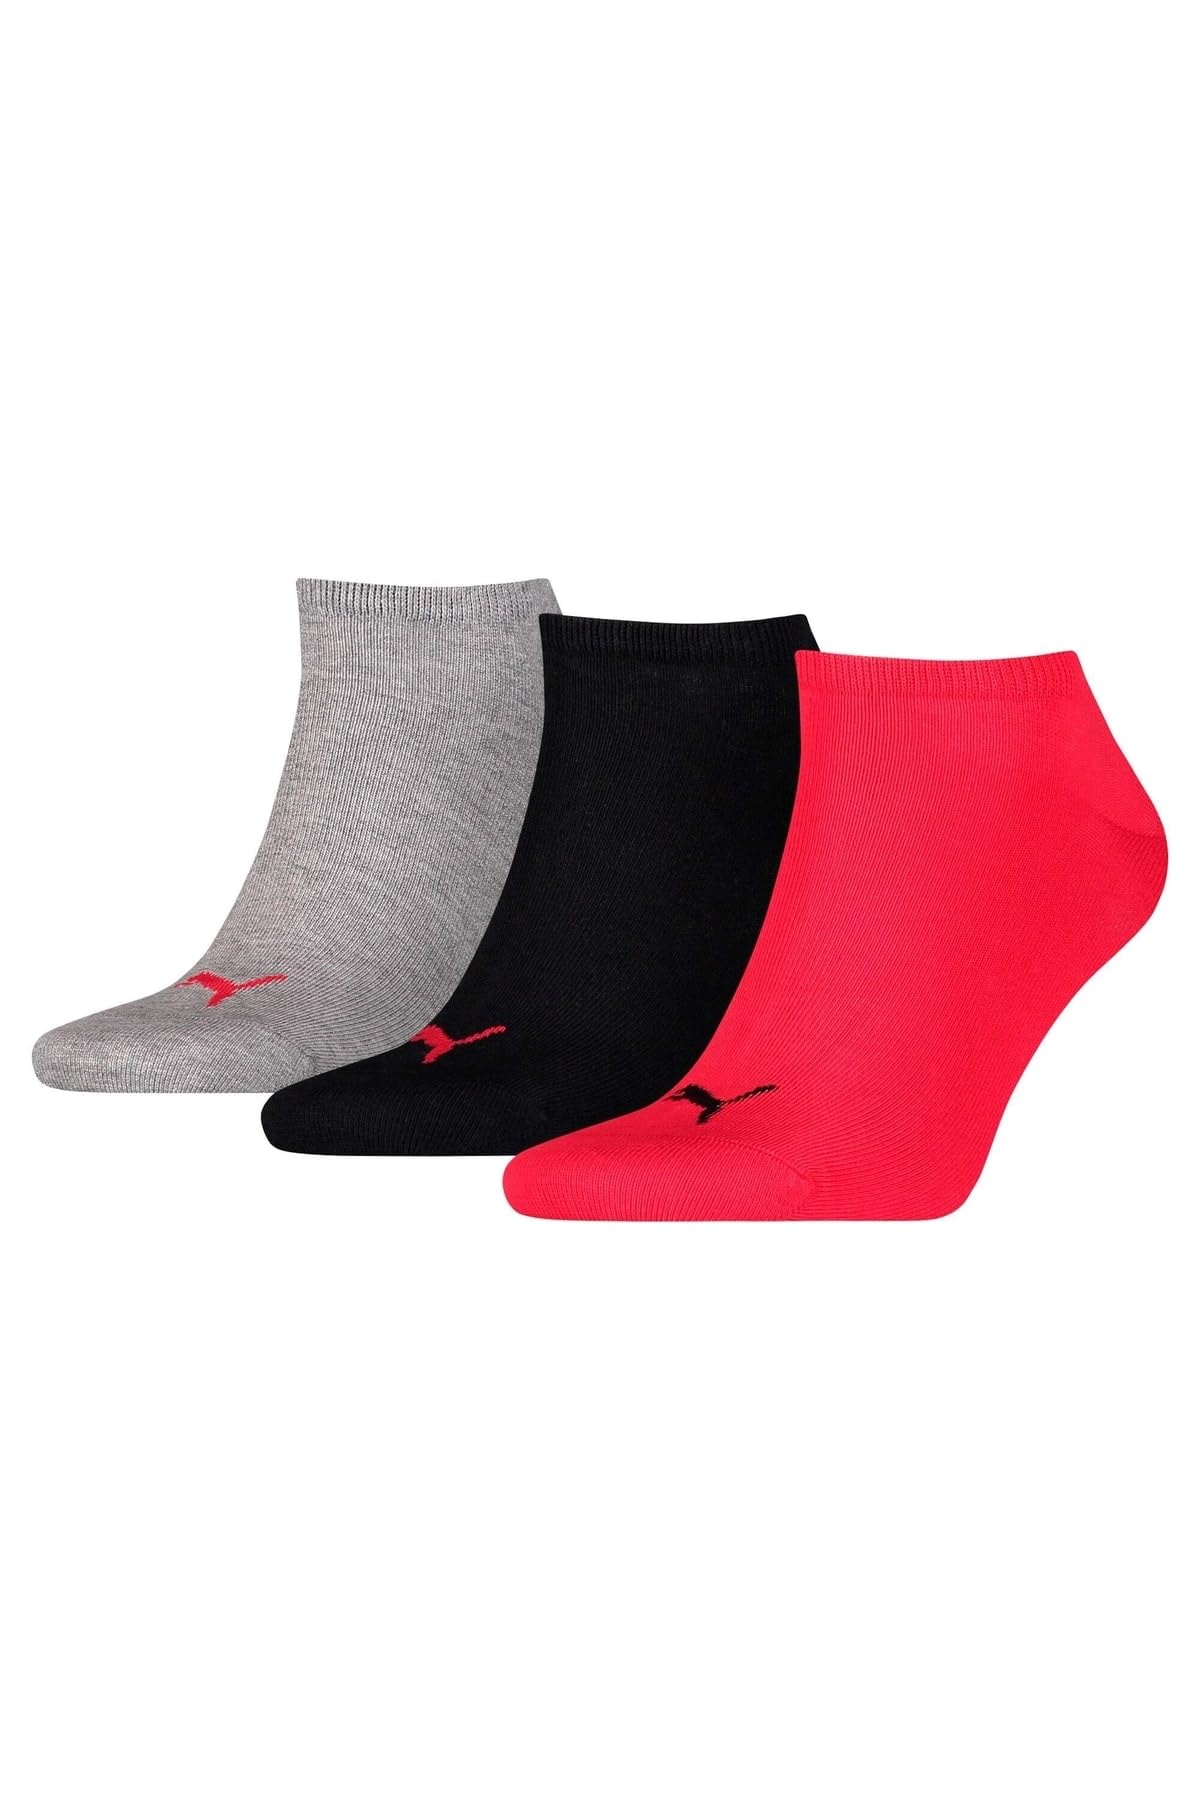 PUMA 9 Paar Sneaker Invisible Socken Gr. 35-49 Unisex für Damen Herren Füßlinge, Farbe:232 - black/red, Socken & Strümpfe:39-42